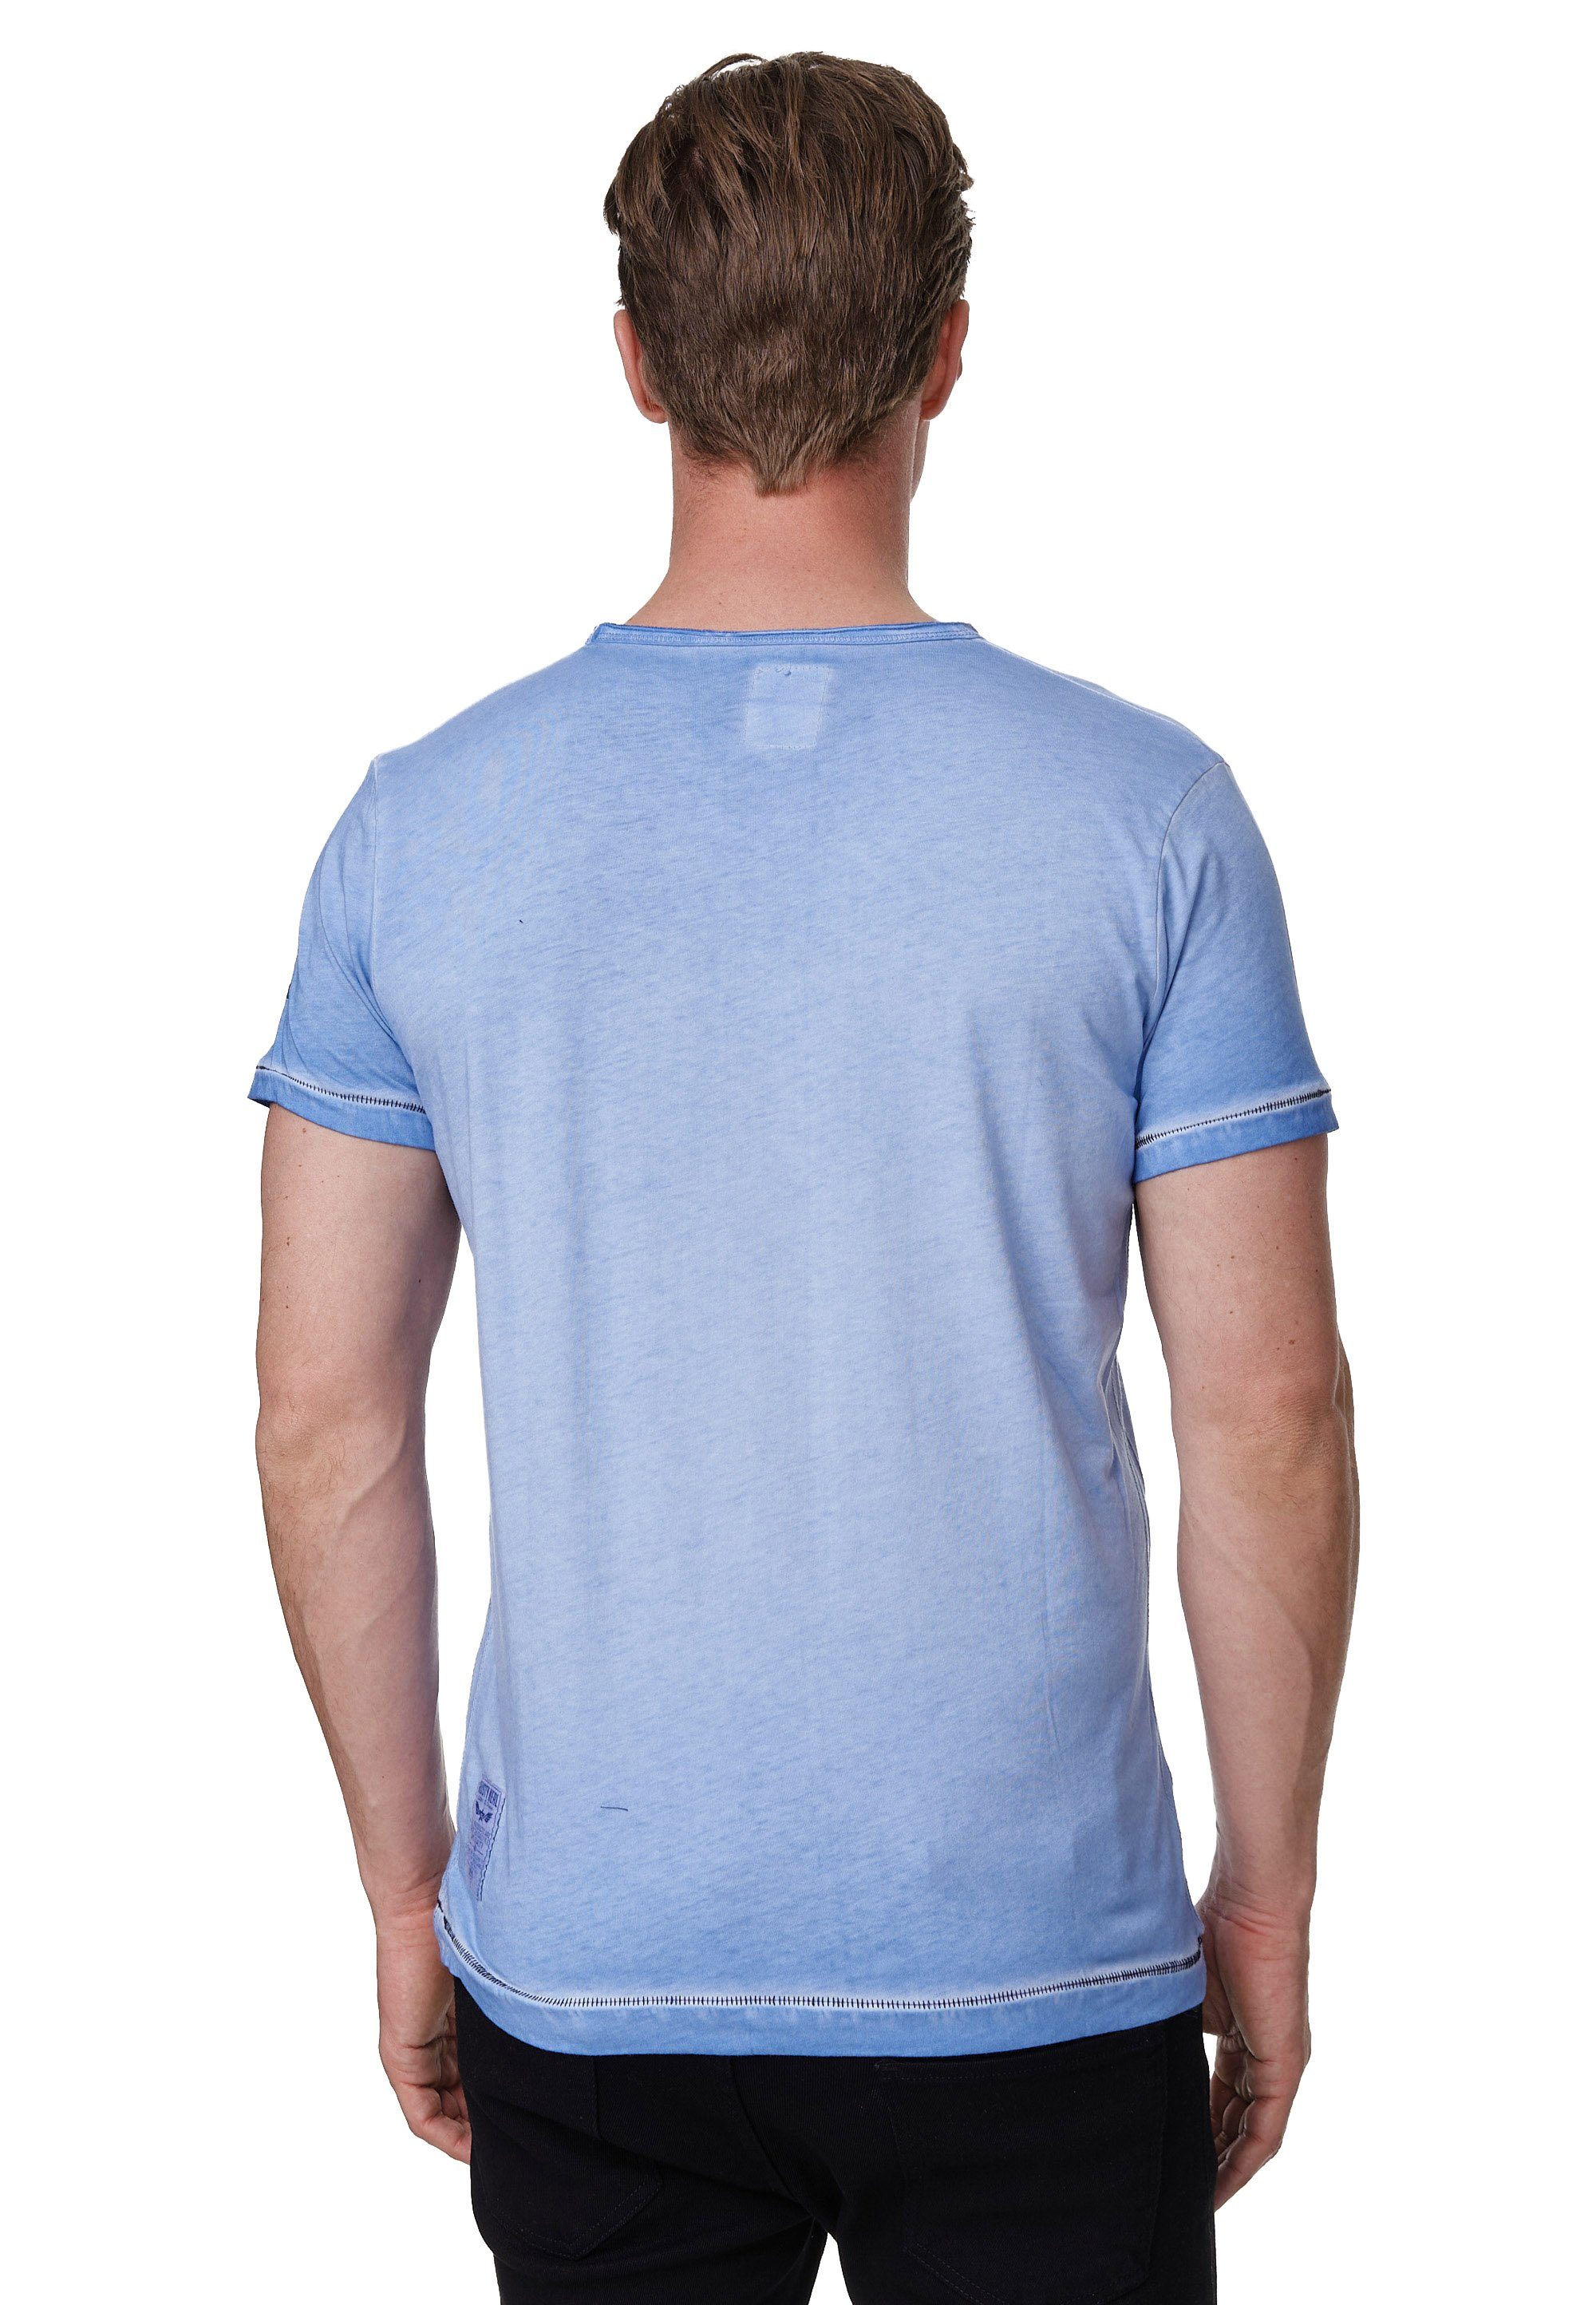 Rusty Neal T-Shirt Vintage-Look trendigen blau im